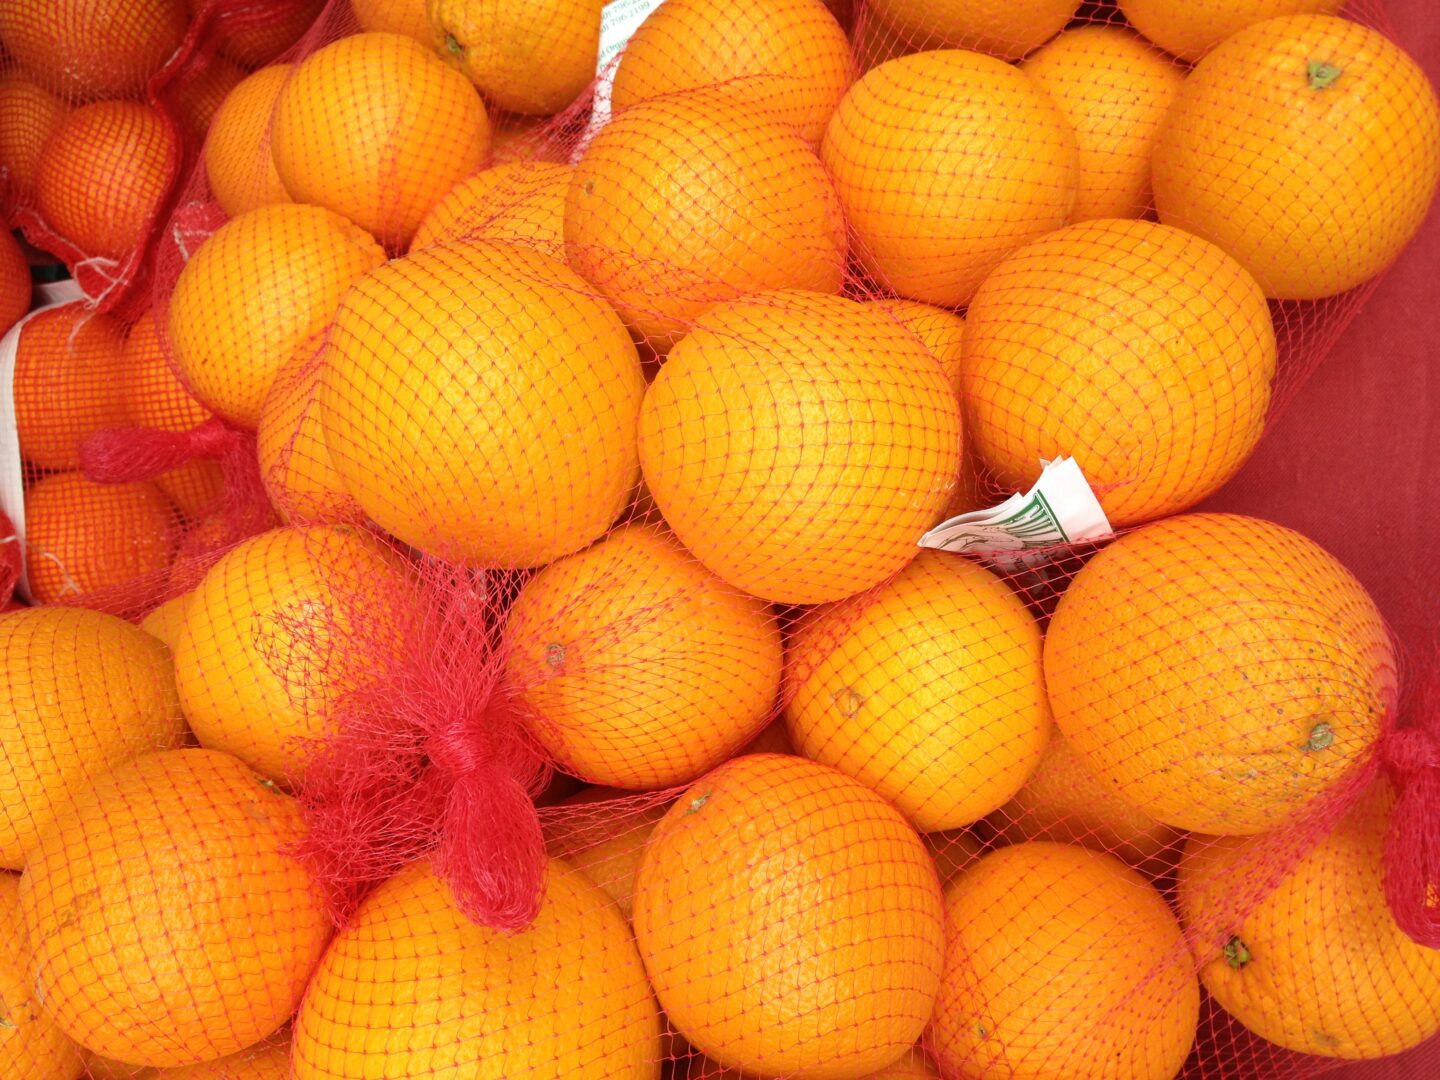 A bunch of oranges in a net.